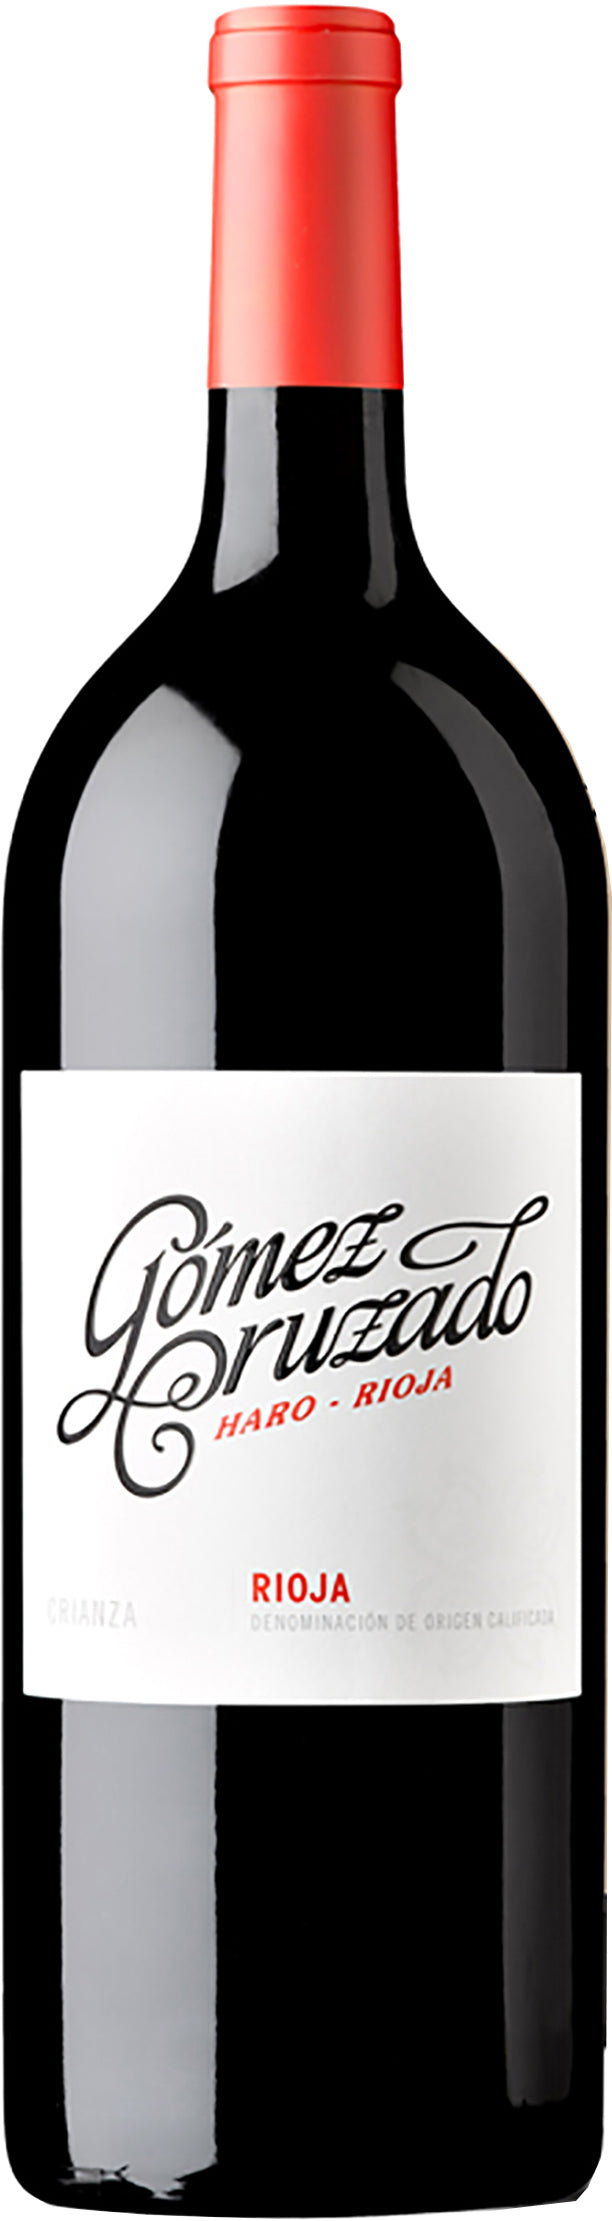 Gomez Cruzado Crianza Rioja MAGNUM 2019